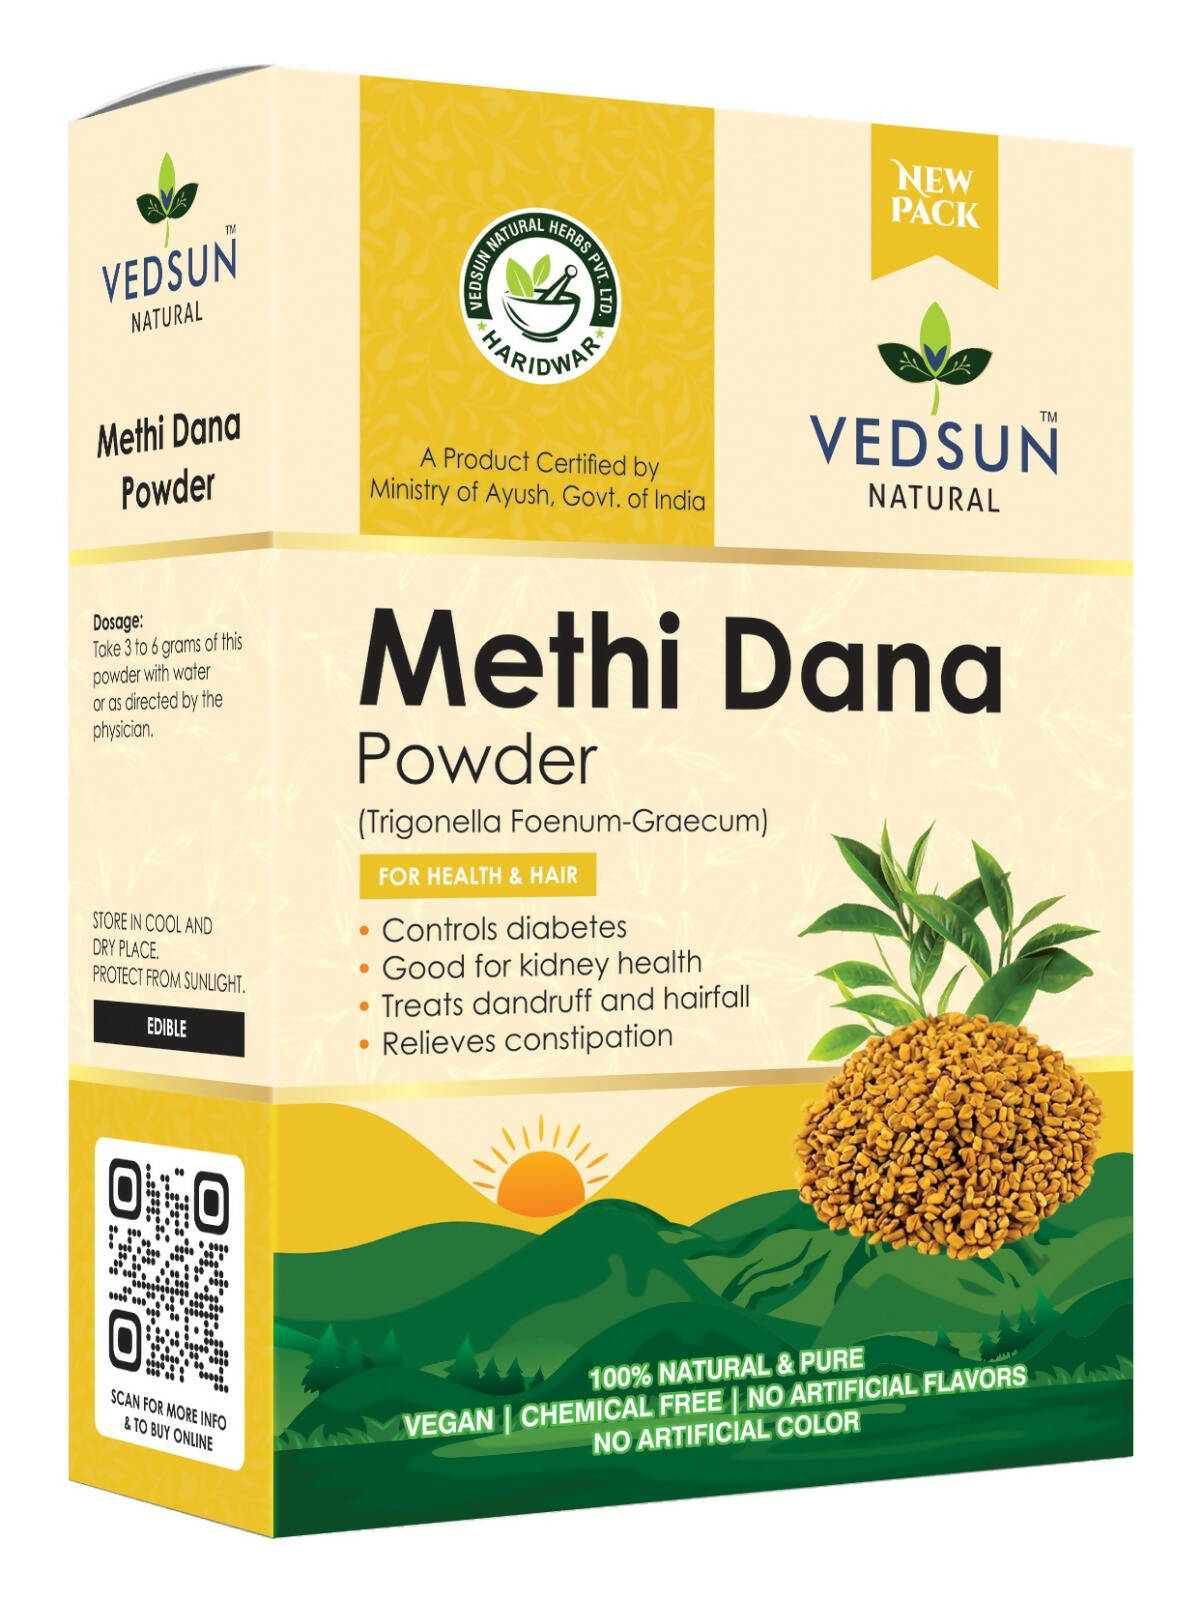 Vedsun Naturals Methi Dana Powder pure and organic for Hair Growth